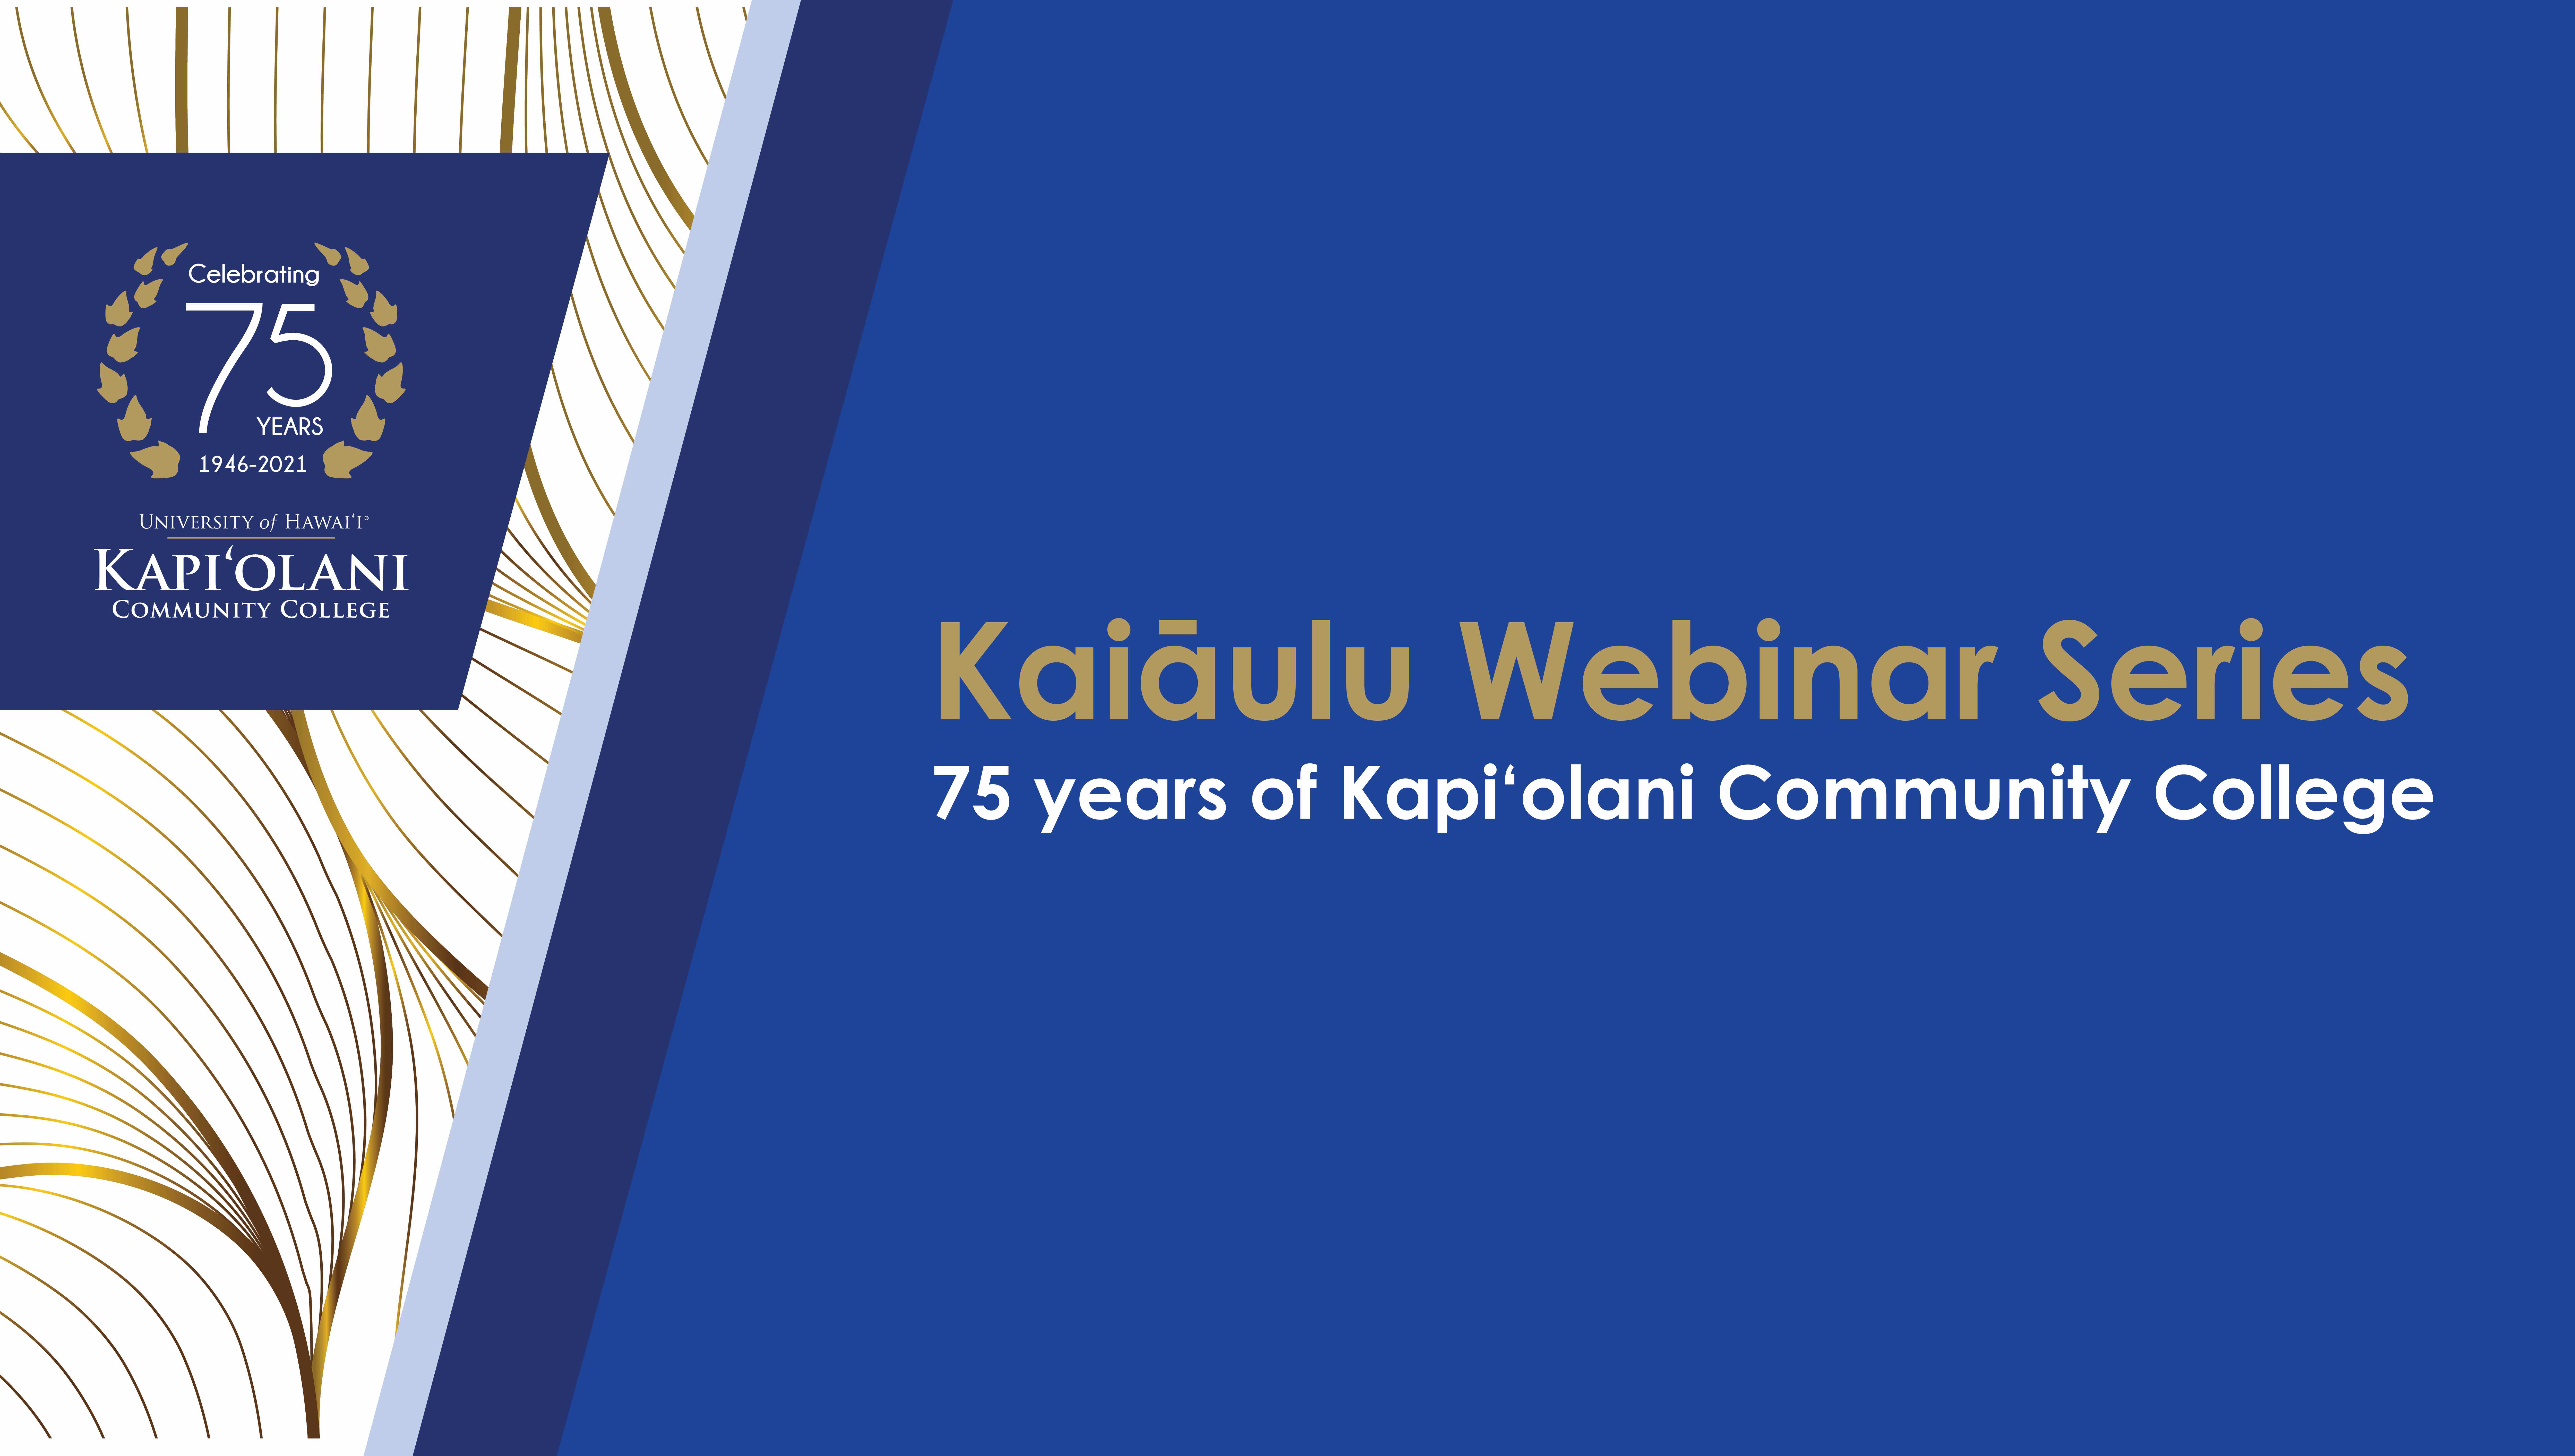 Kaiāulu Webinar Series